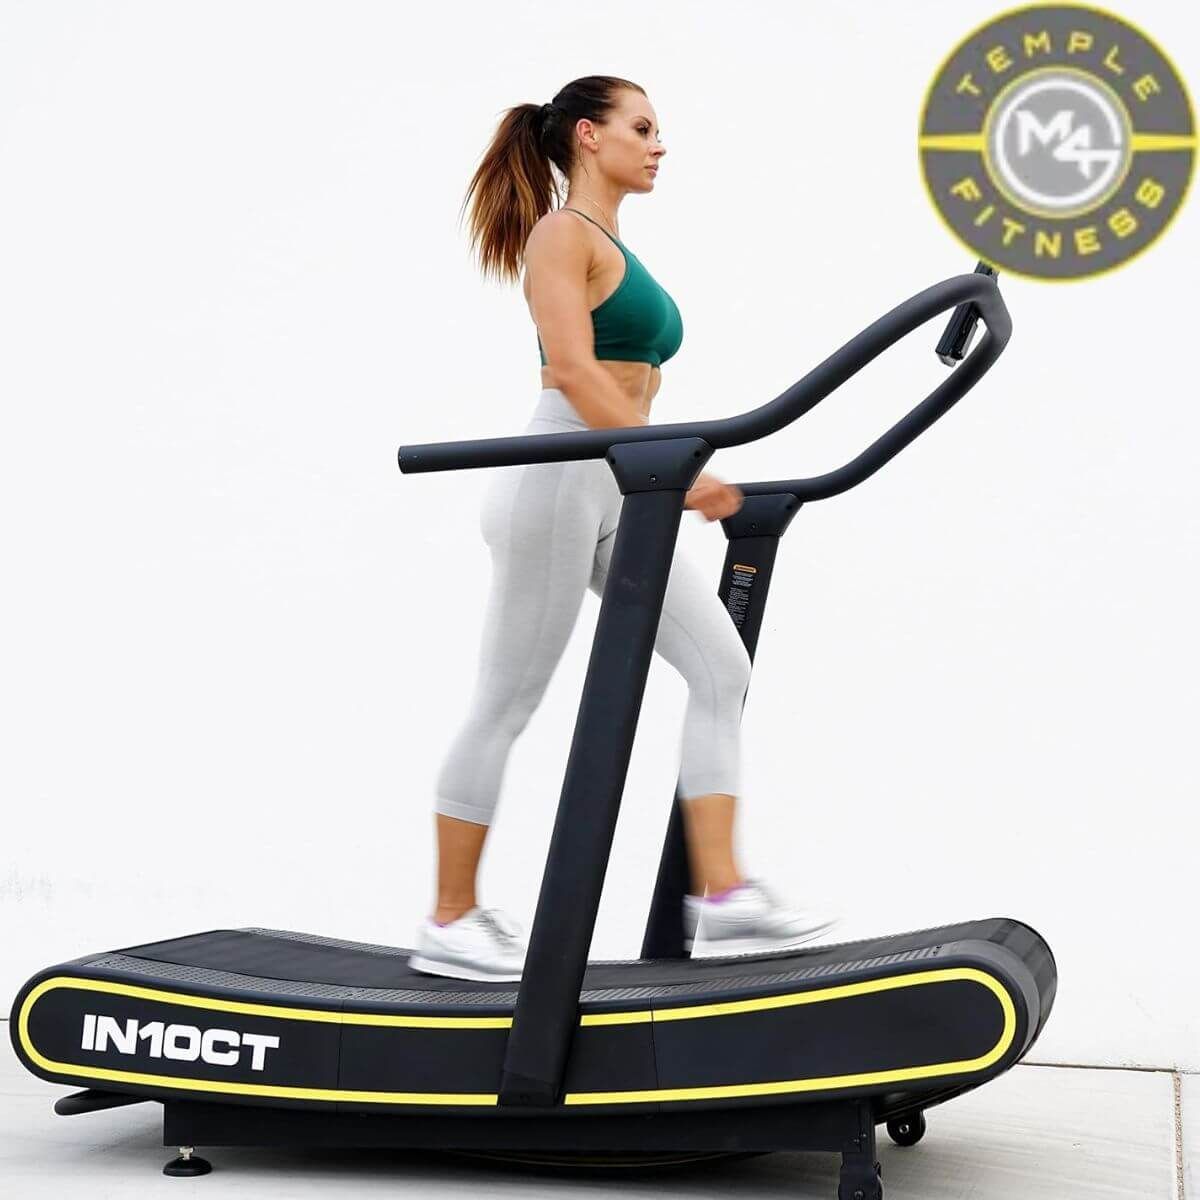 Self-Propelled Treadmill